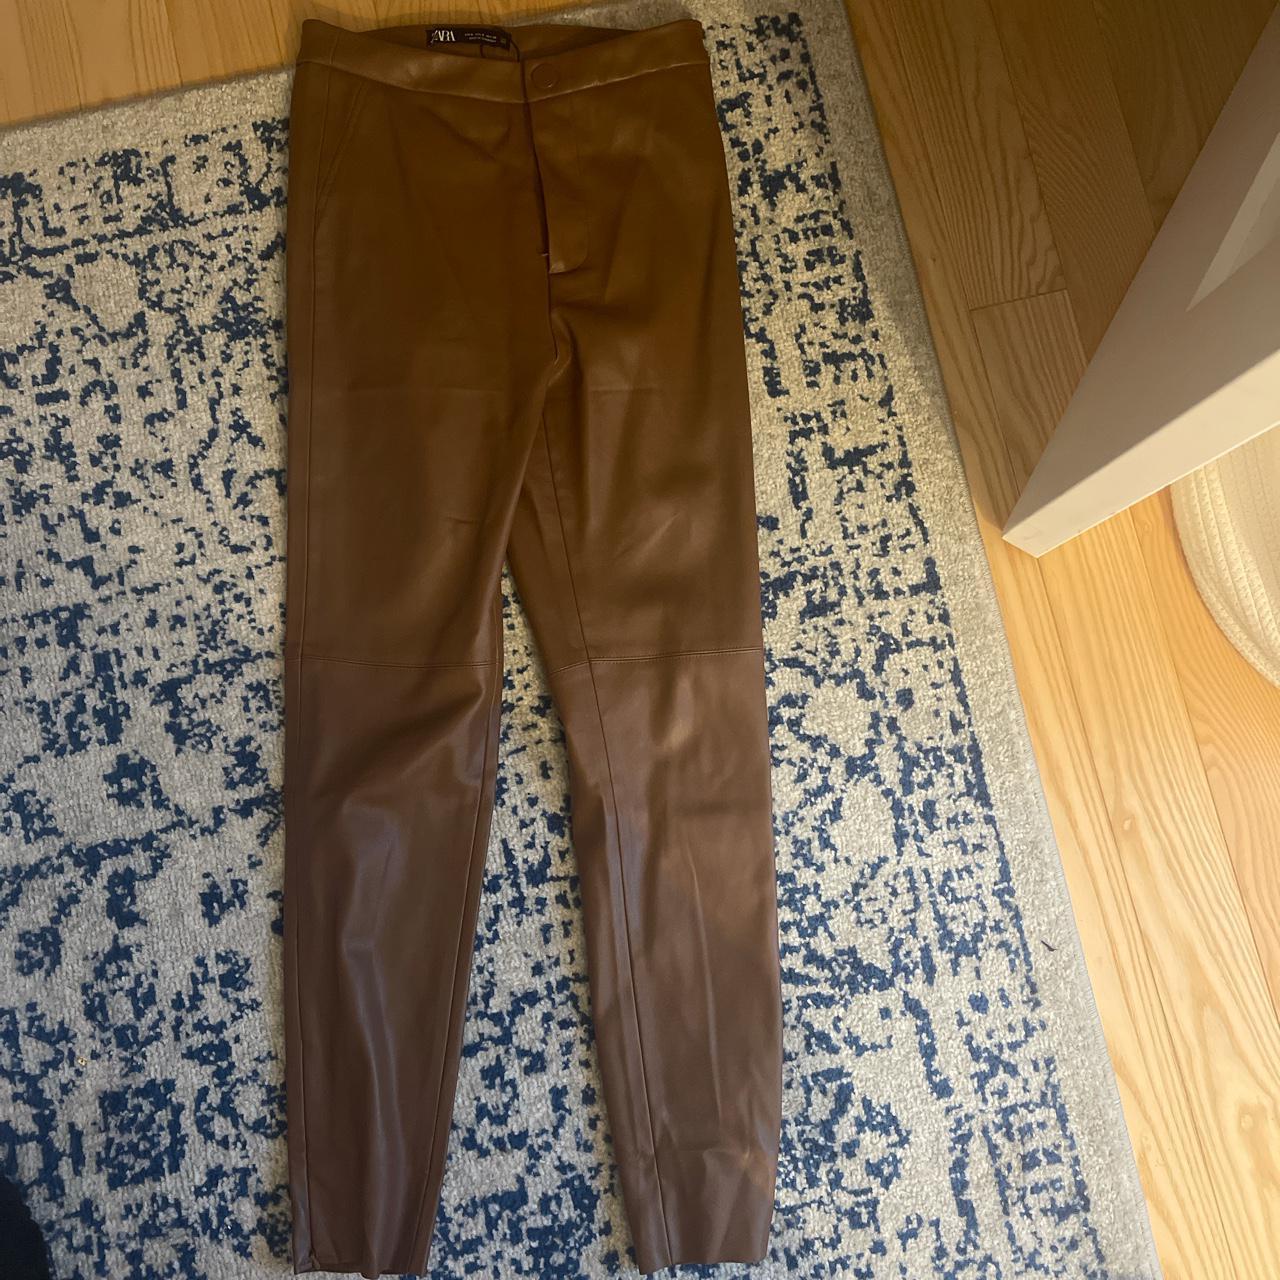 Zara brown leather pants size S #fall #nee #zara